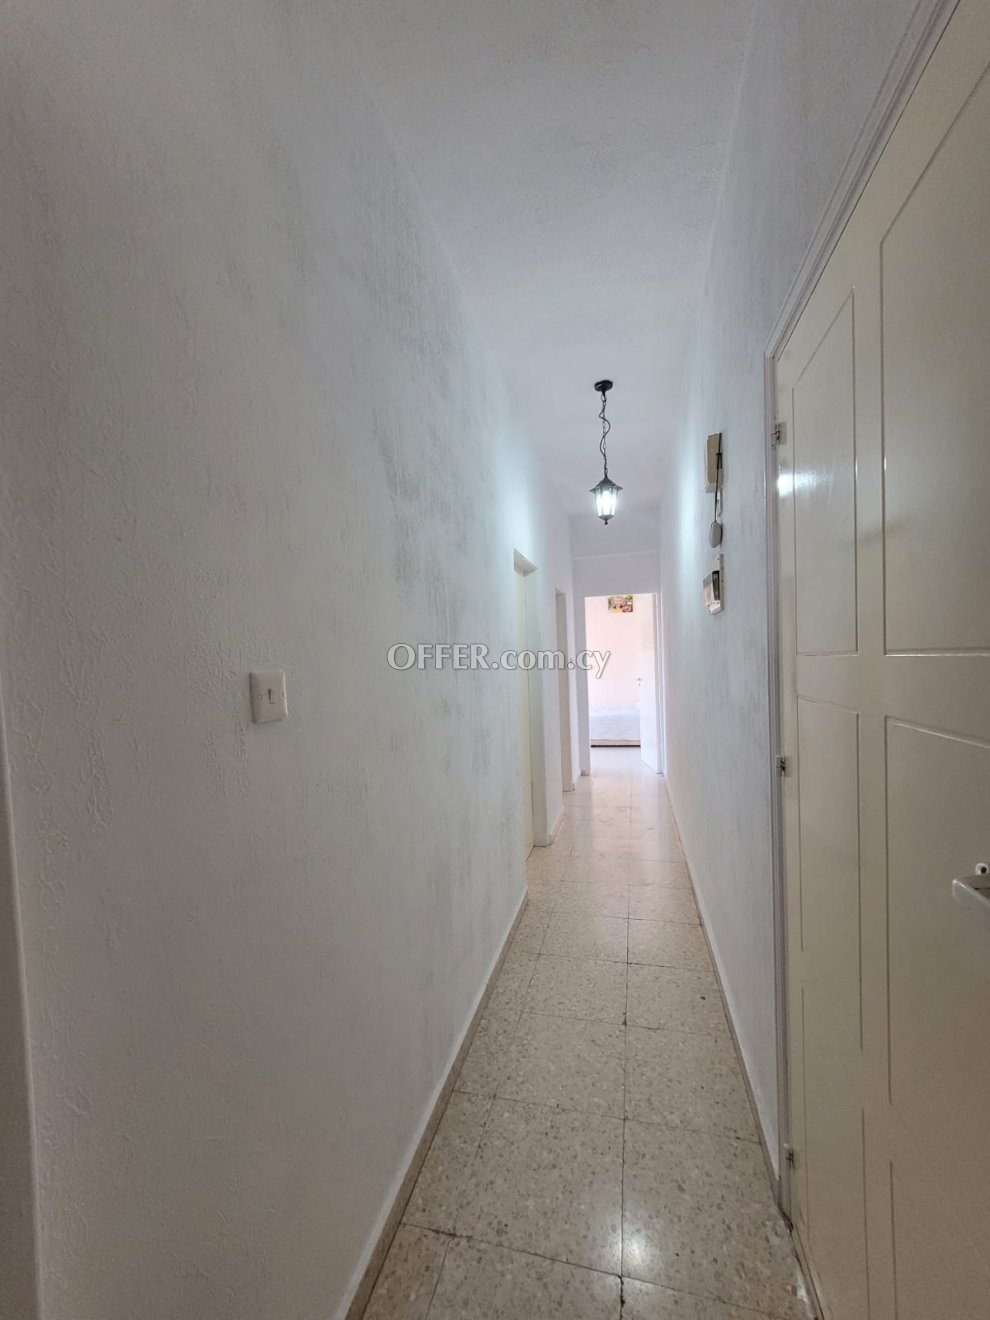 New For Sale €135,000 Apartment 2 bedrooms, Oroklini, Voroklini Larnaca - 8